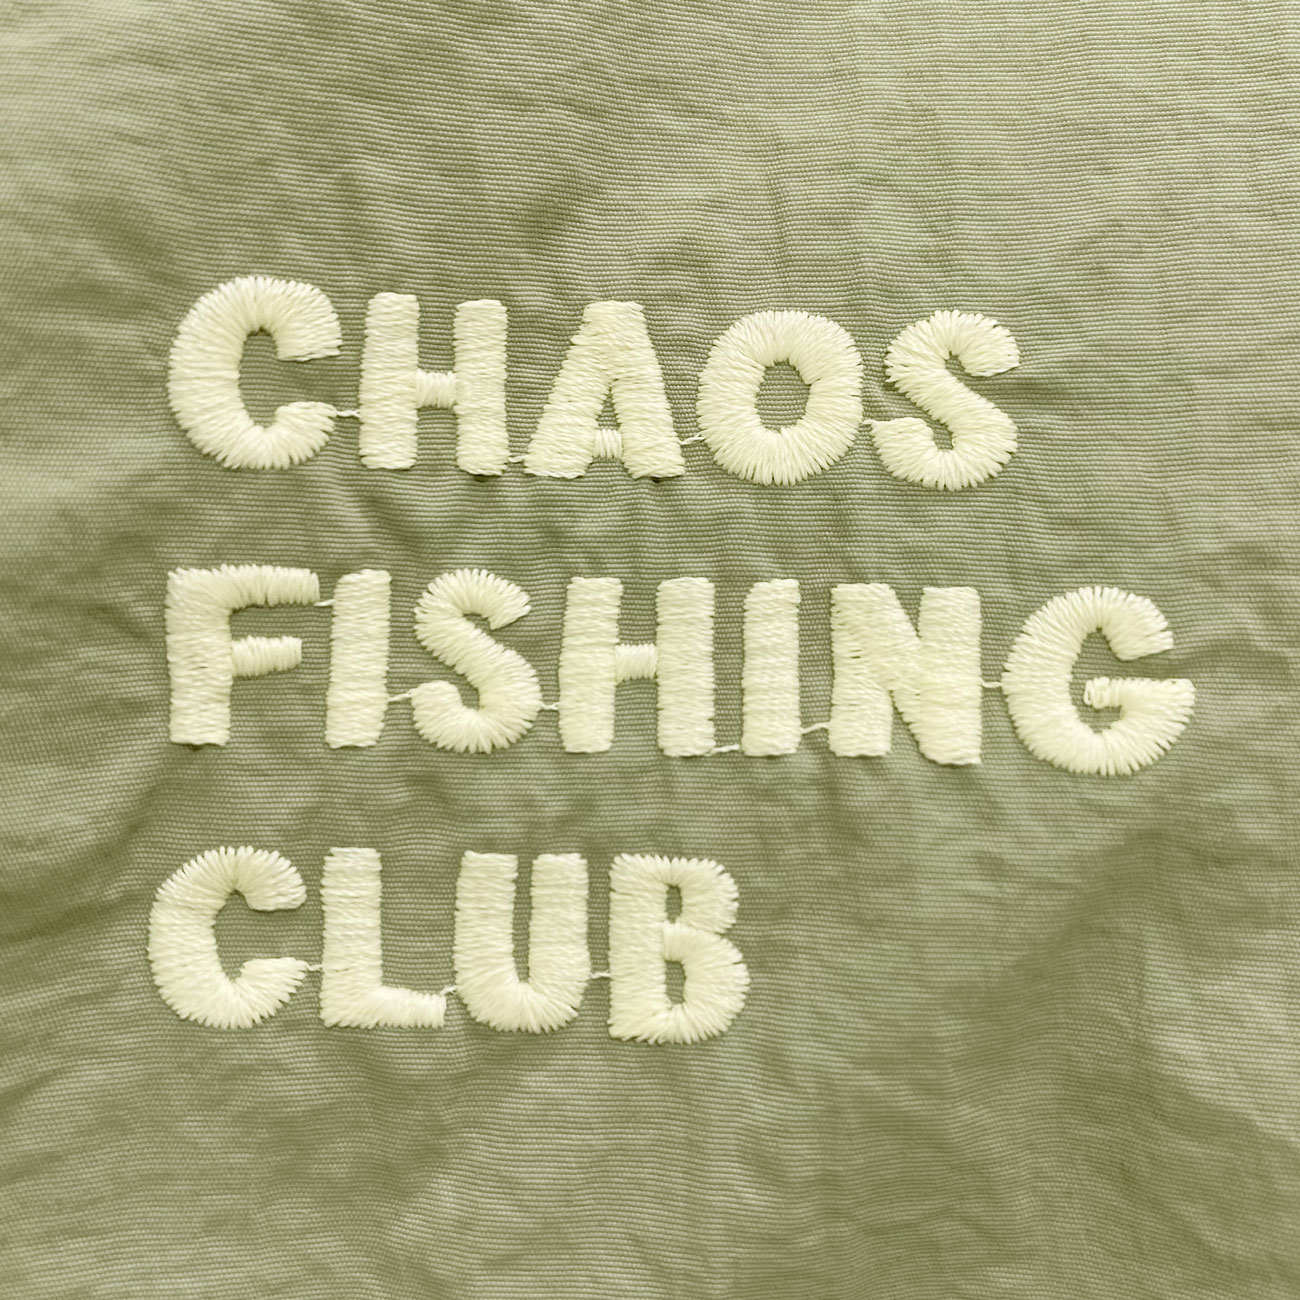 CHAOS FISHING CLUB TARPON PANTS | HIGHSOX SKATEBOARDS